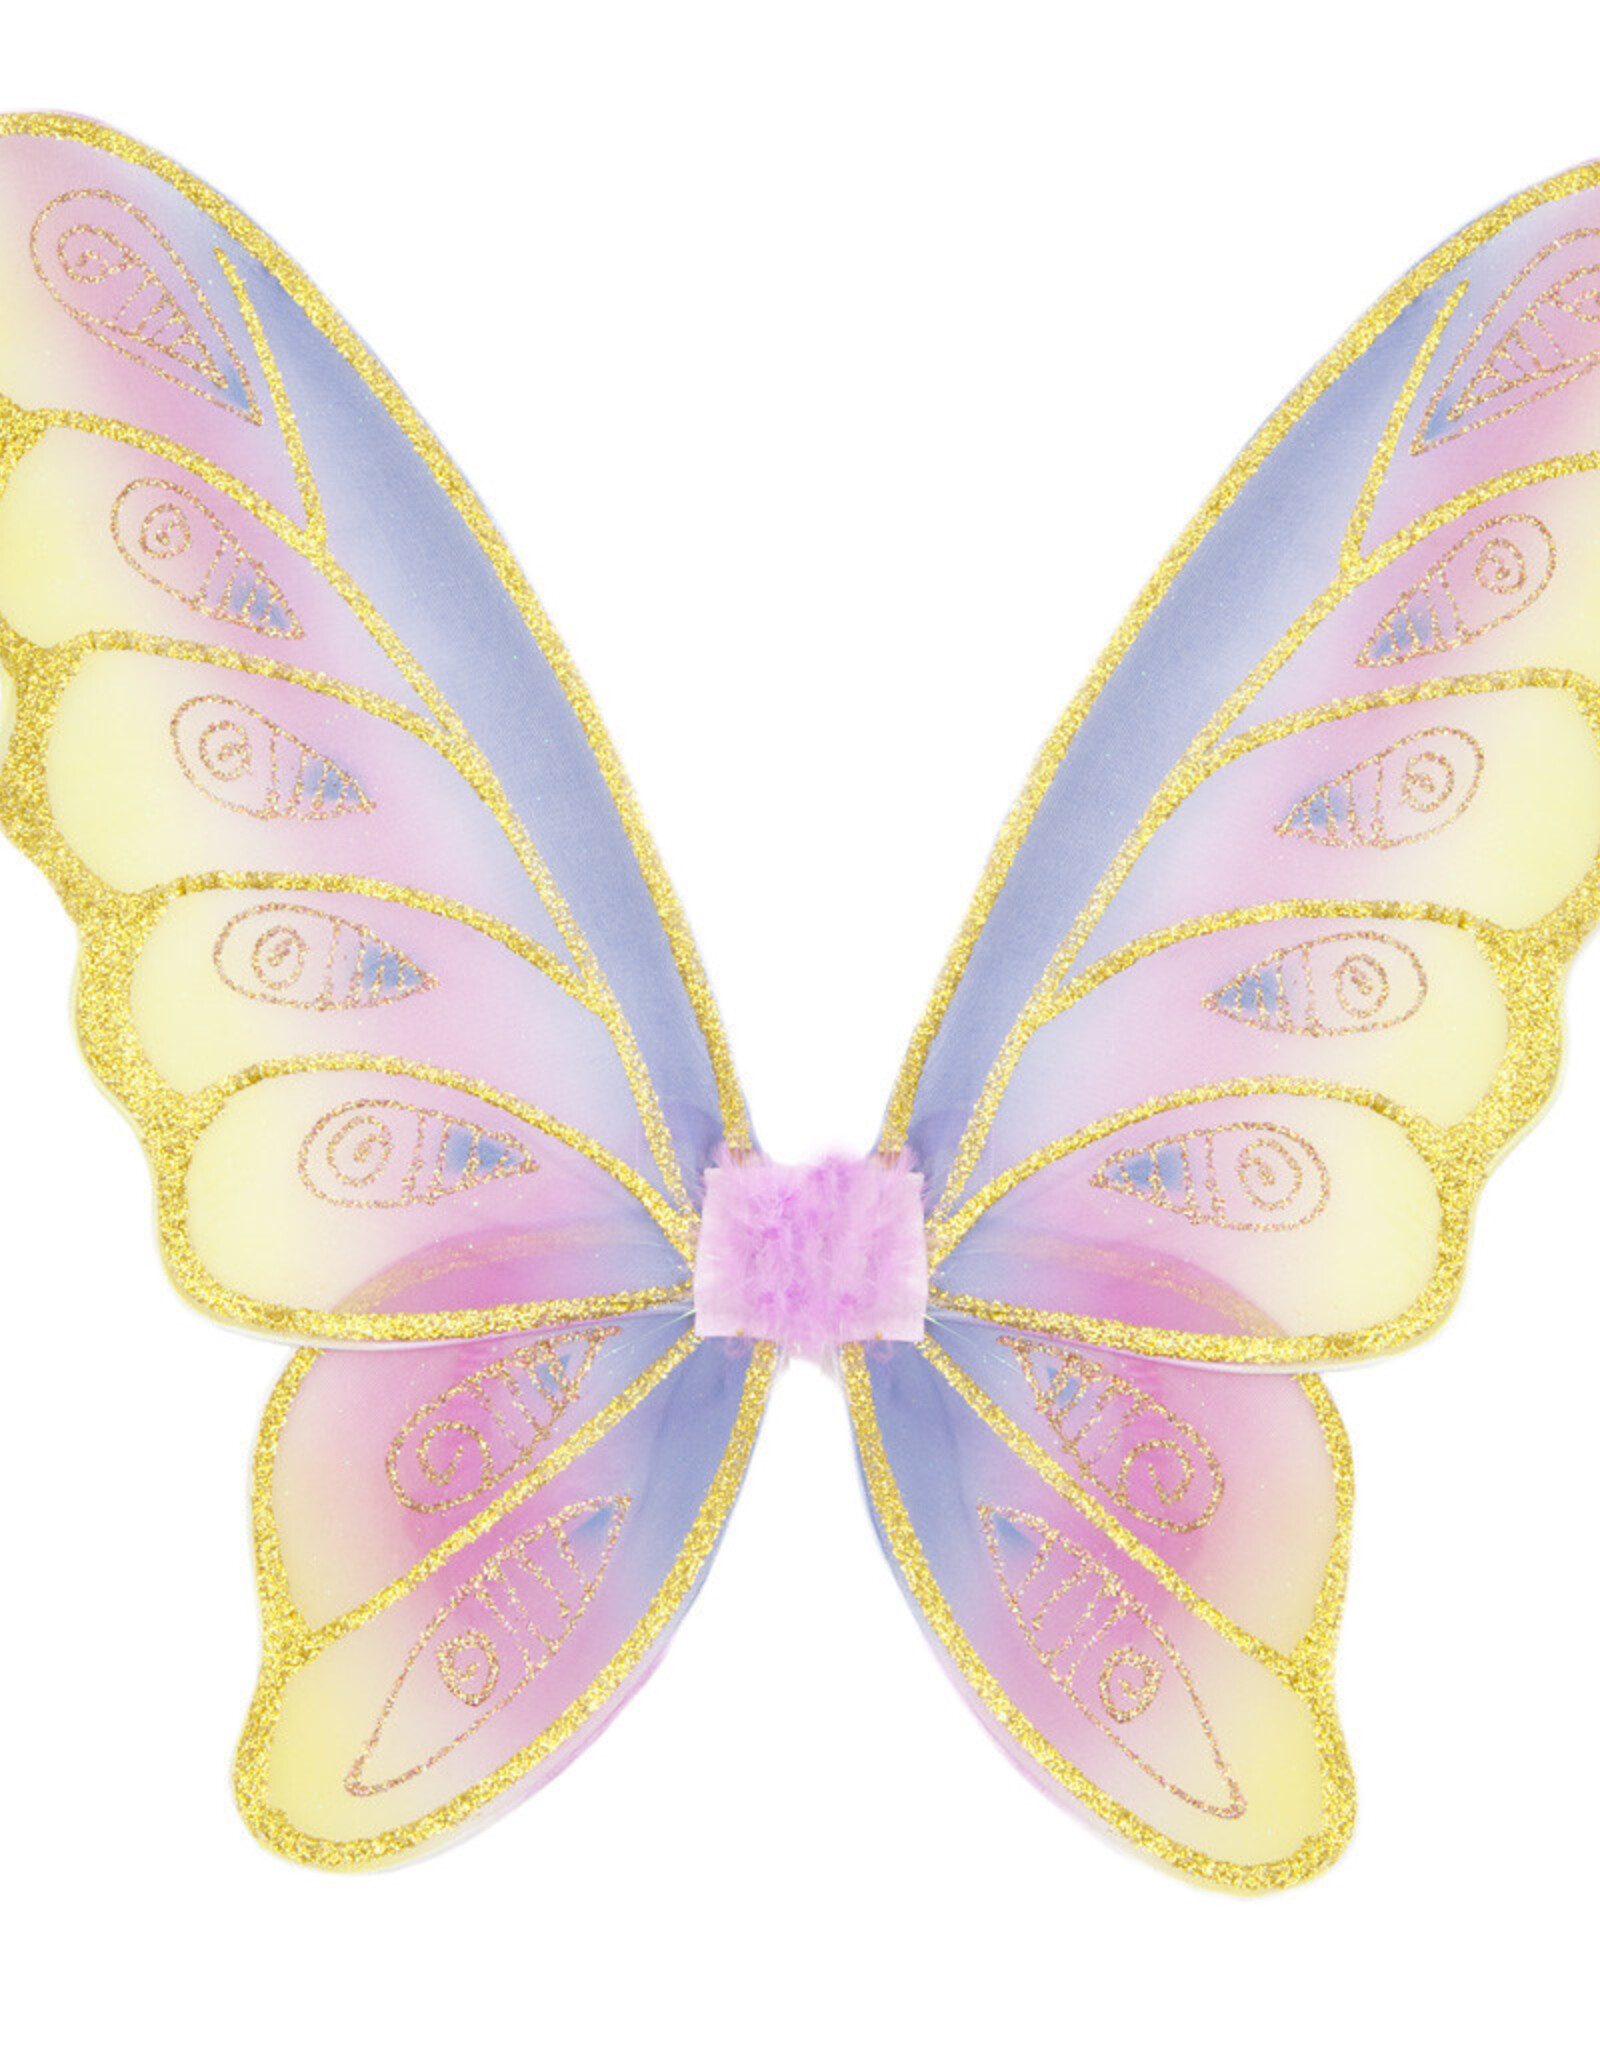 CREATIVE EDUCATION Glitter Rainbow Wings, Multi Pastel